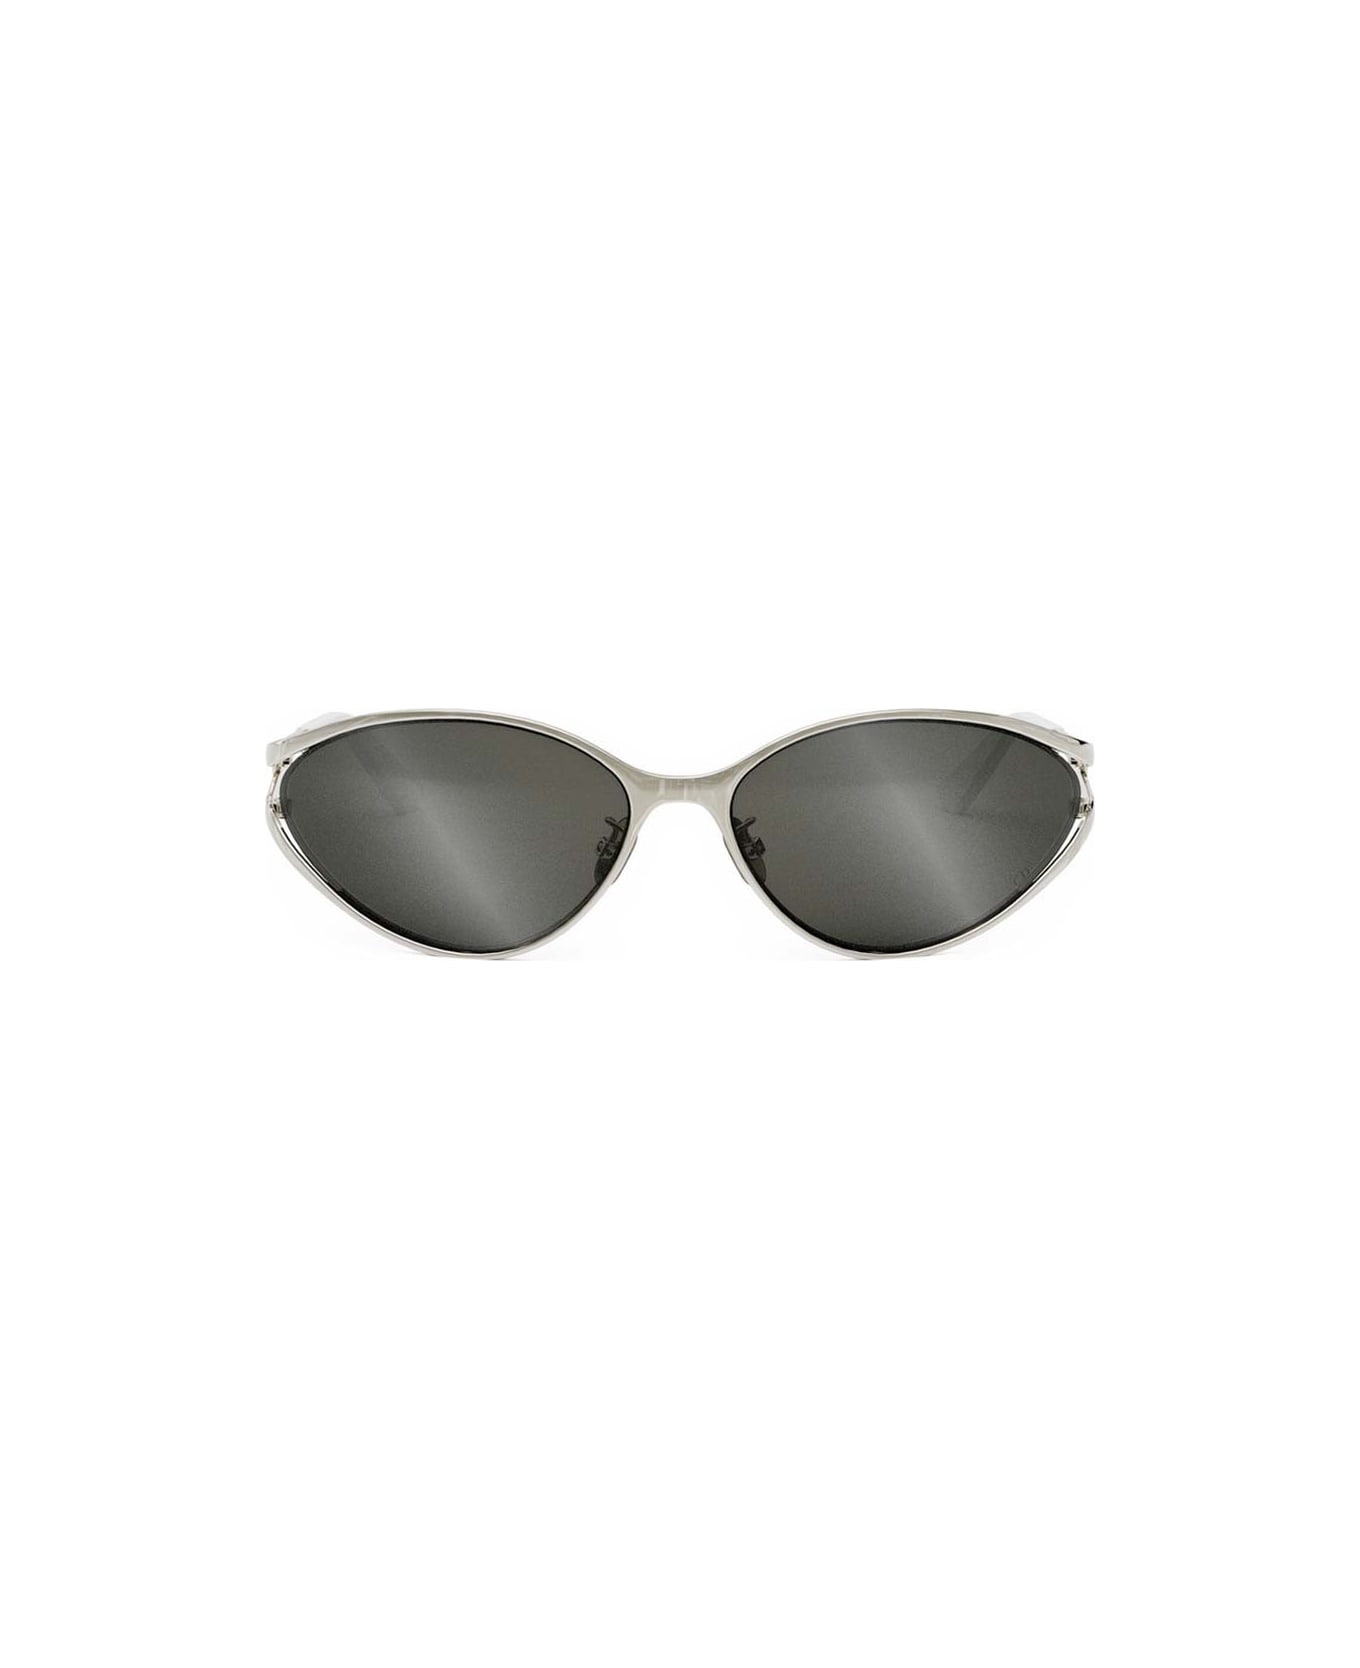 Dior Eyewear Sunglasses - Oro e argento/Silver